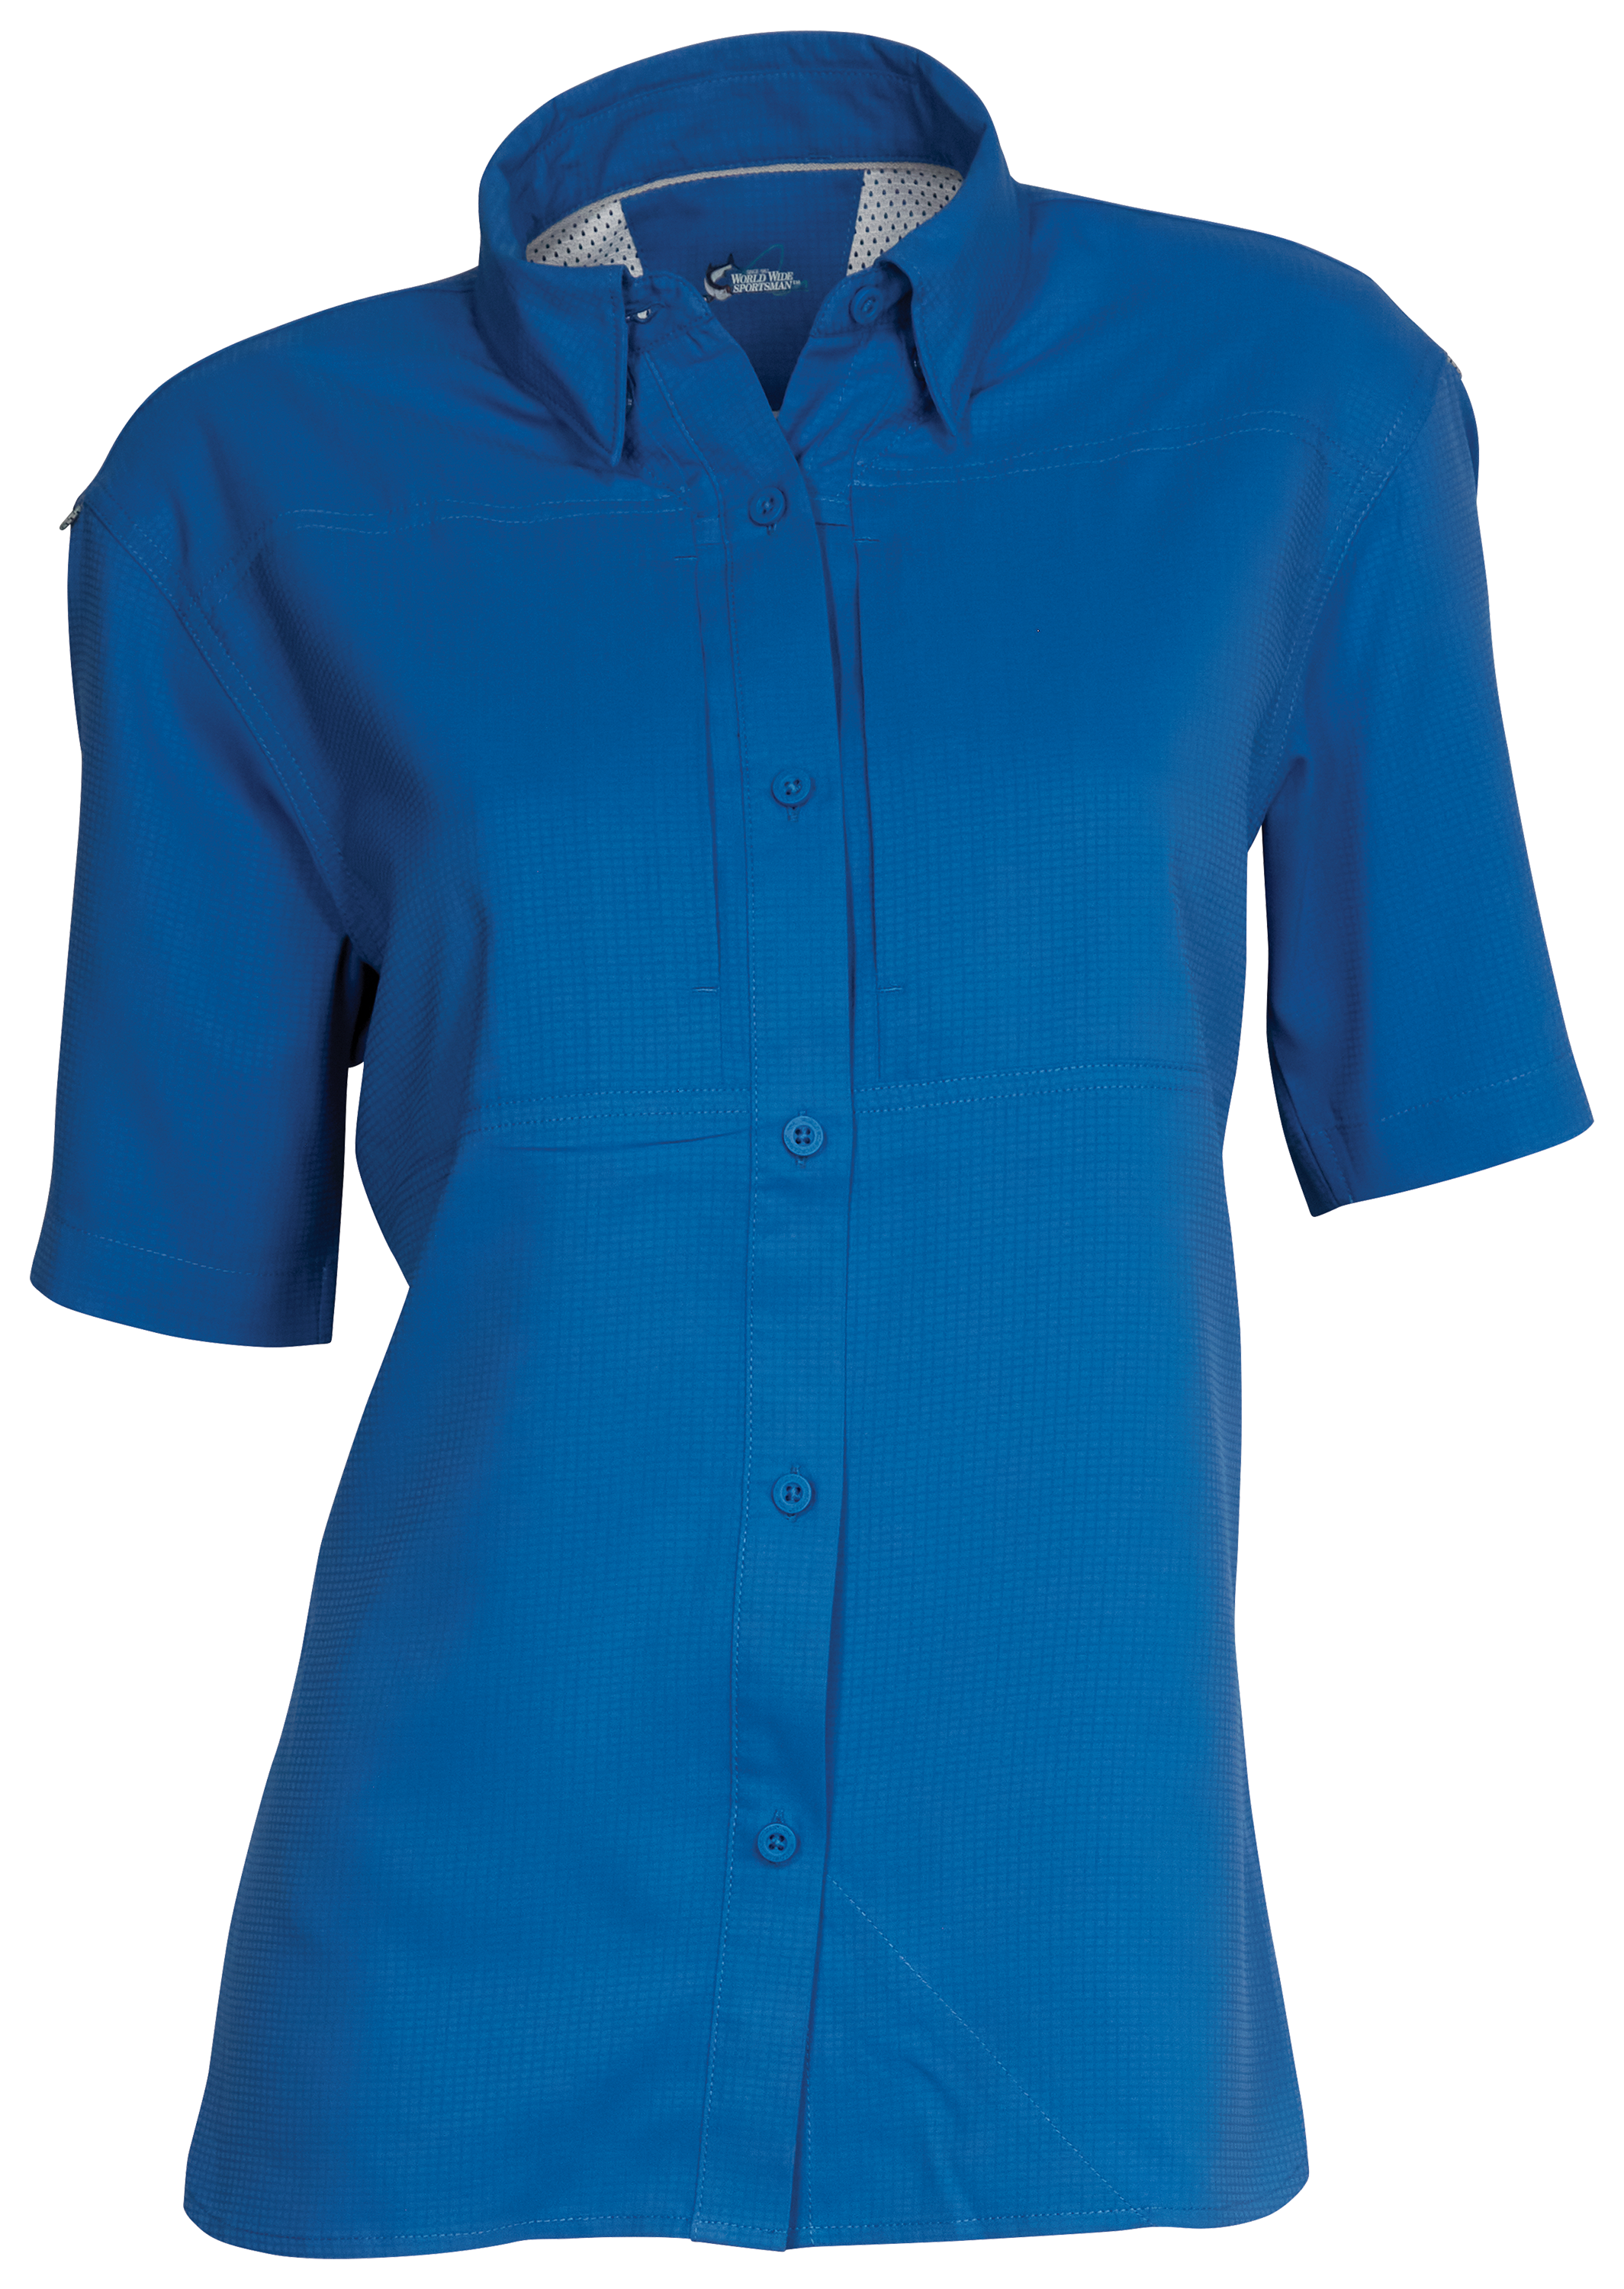 World Wide Sportsman Marina Short-Sleeve Shirt for Ladies - Delft Blue - L